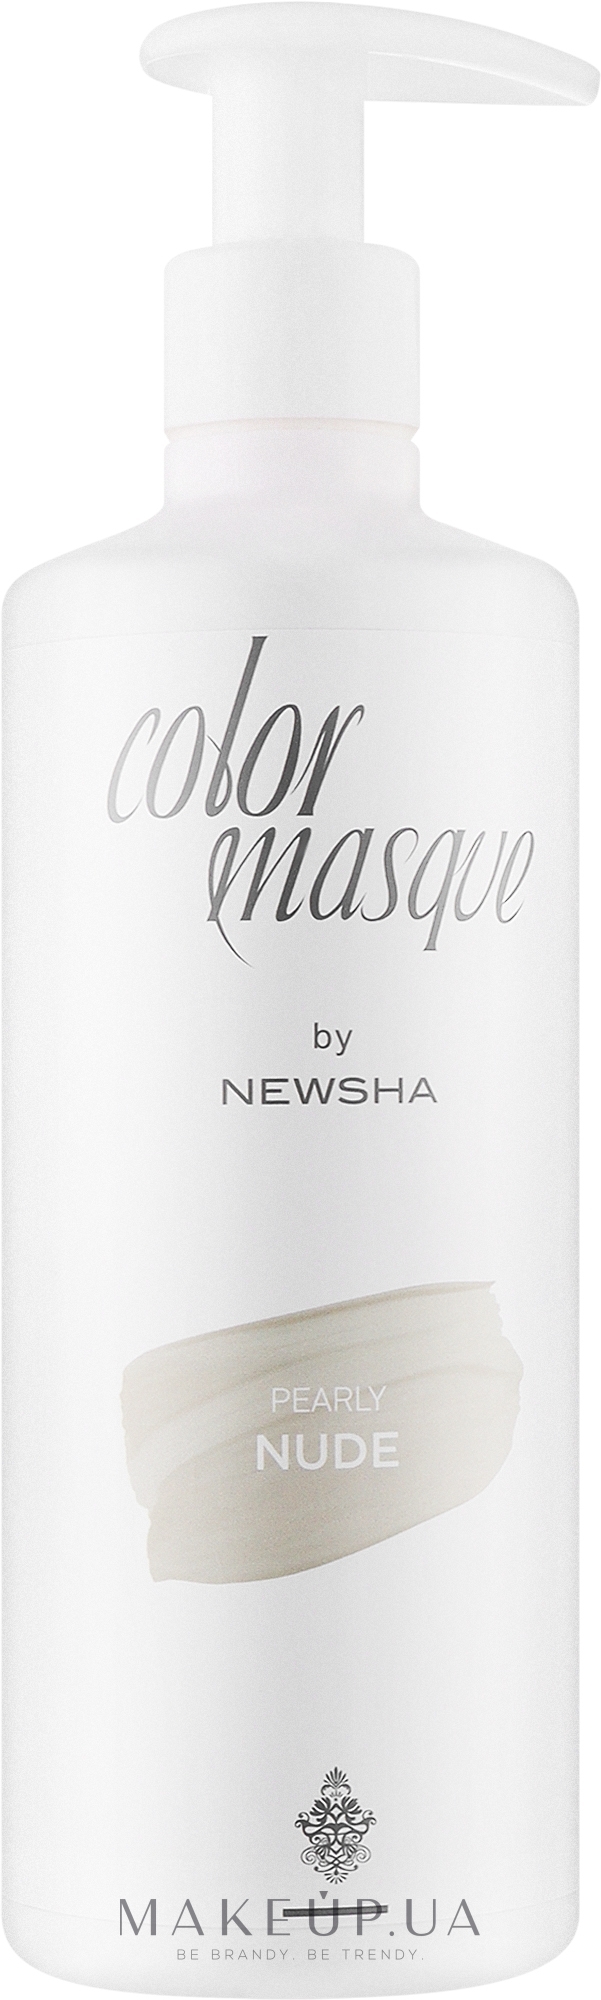 Цветная маска для волос - Newsha Color Masque Pearly Nude — фото 500ml